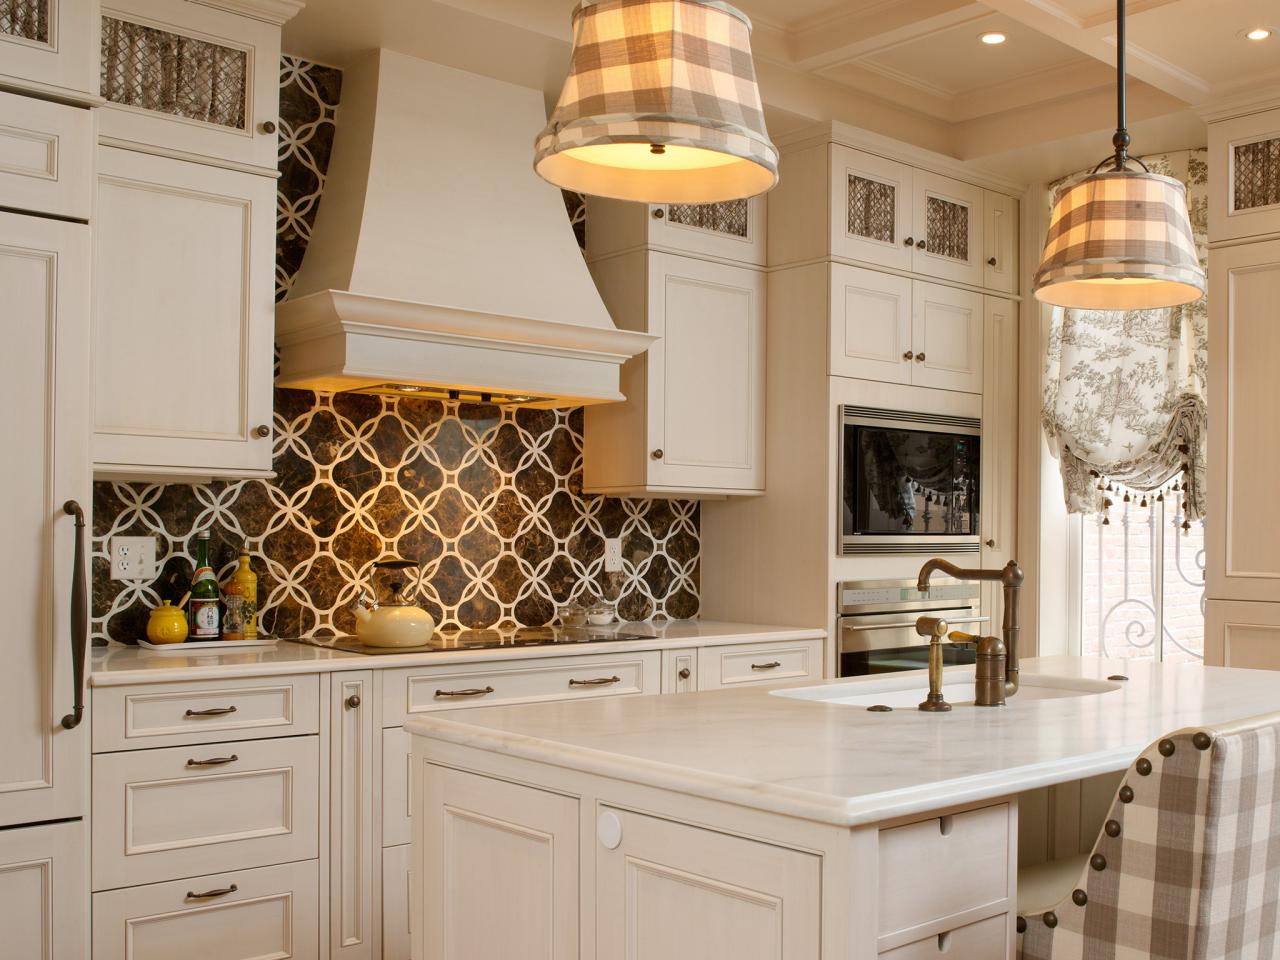 20 Stunning Kitchen Backsplash Design Ideas, Tile Backsplash Kitchen Ideas